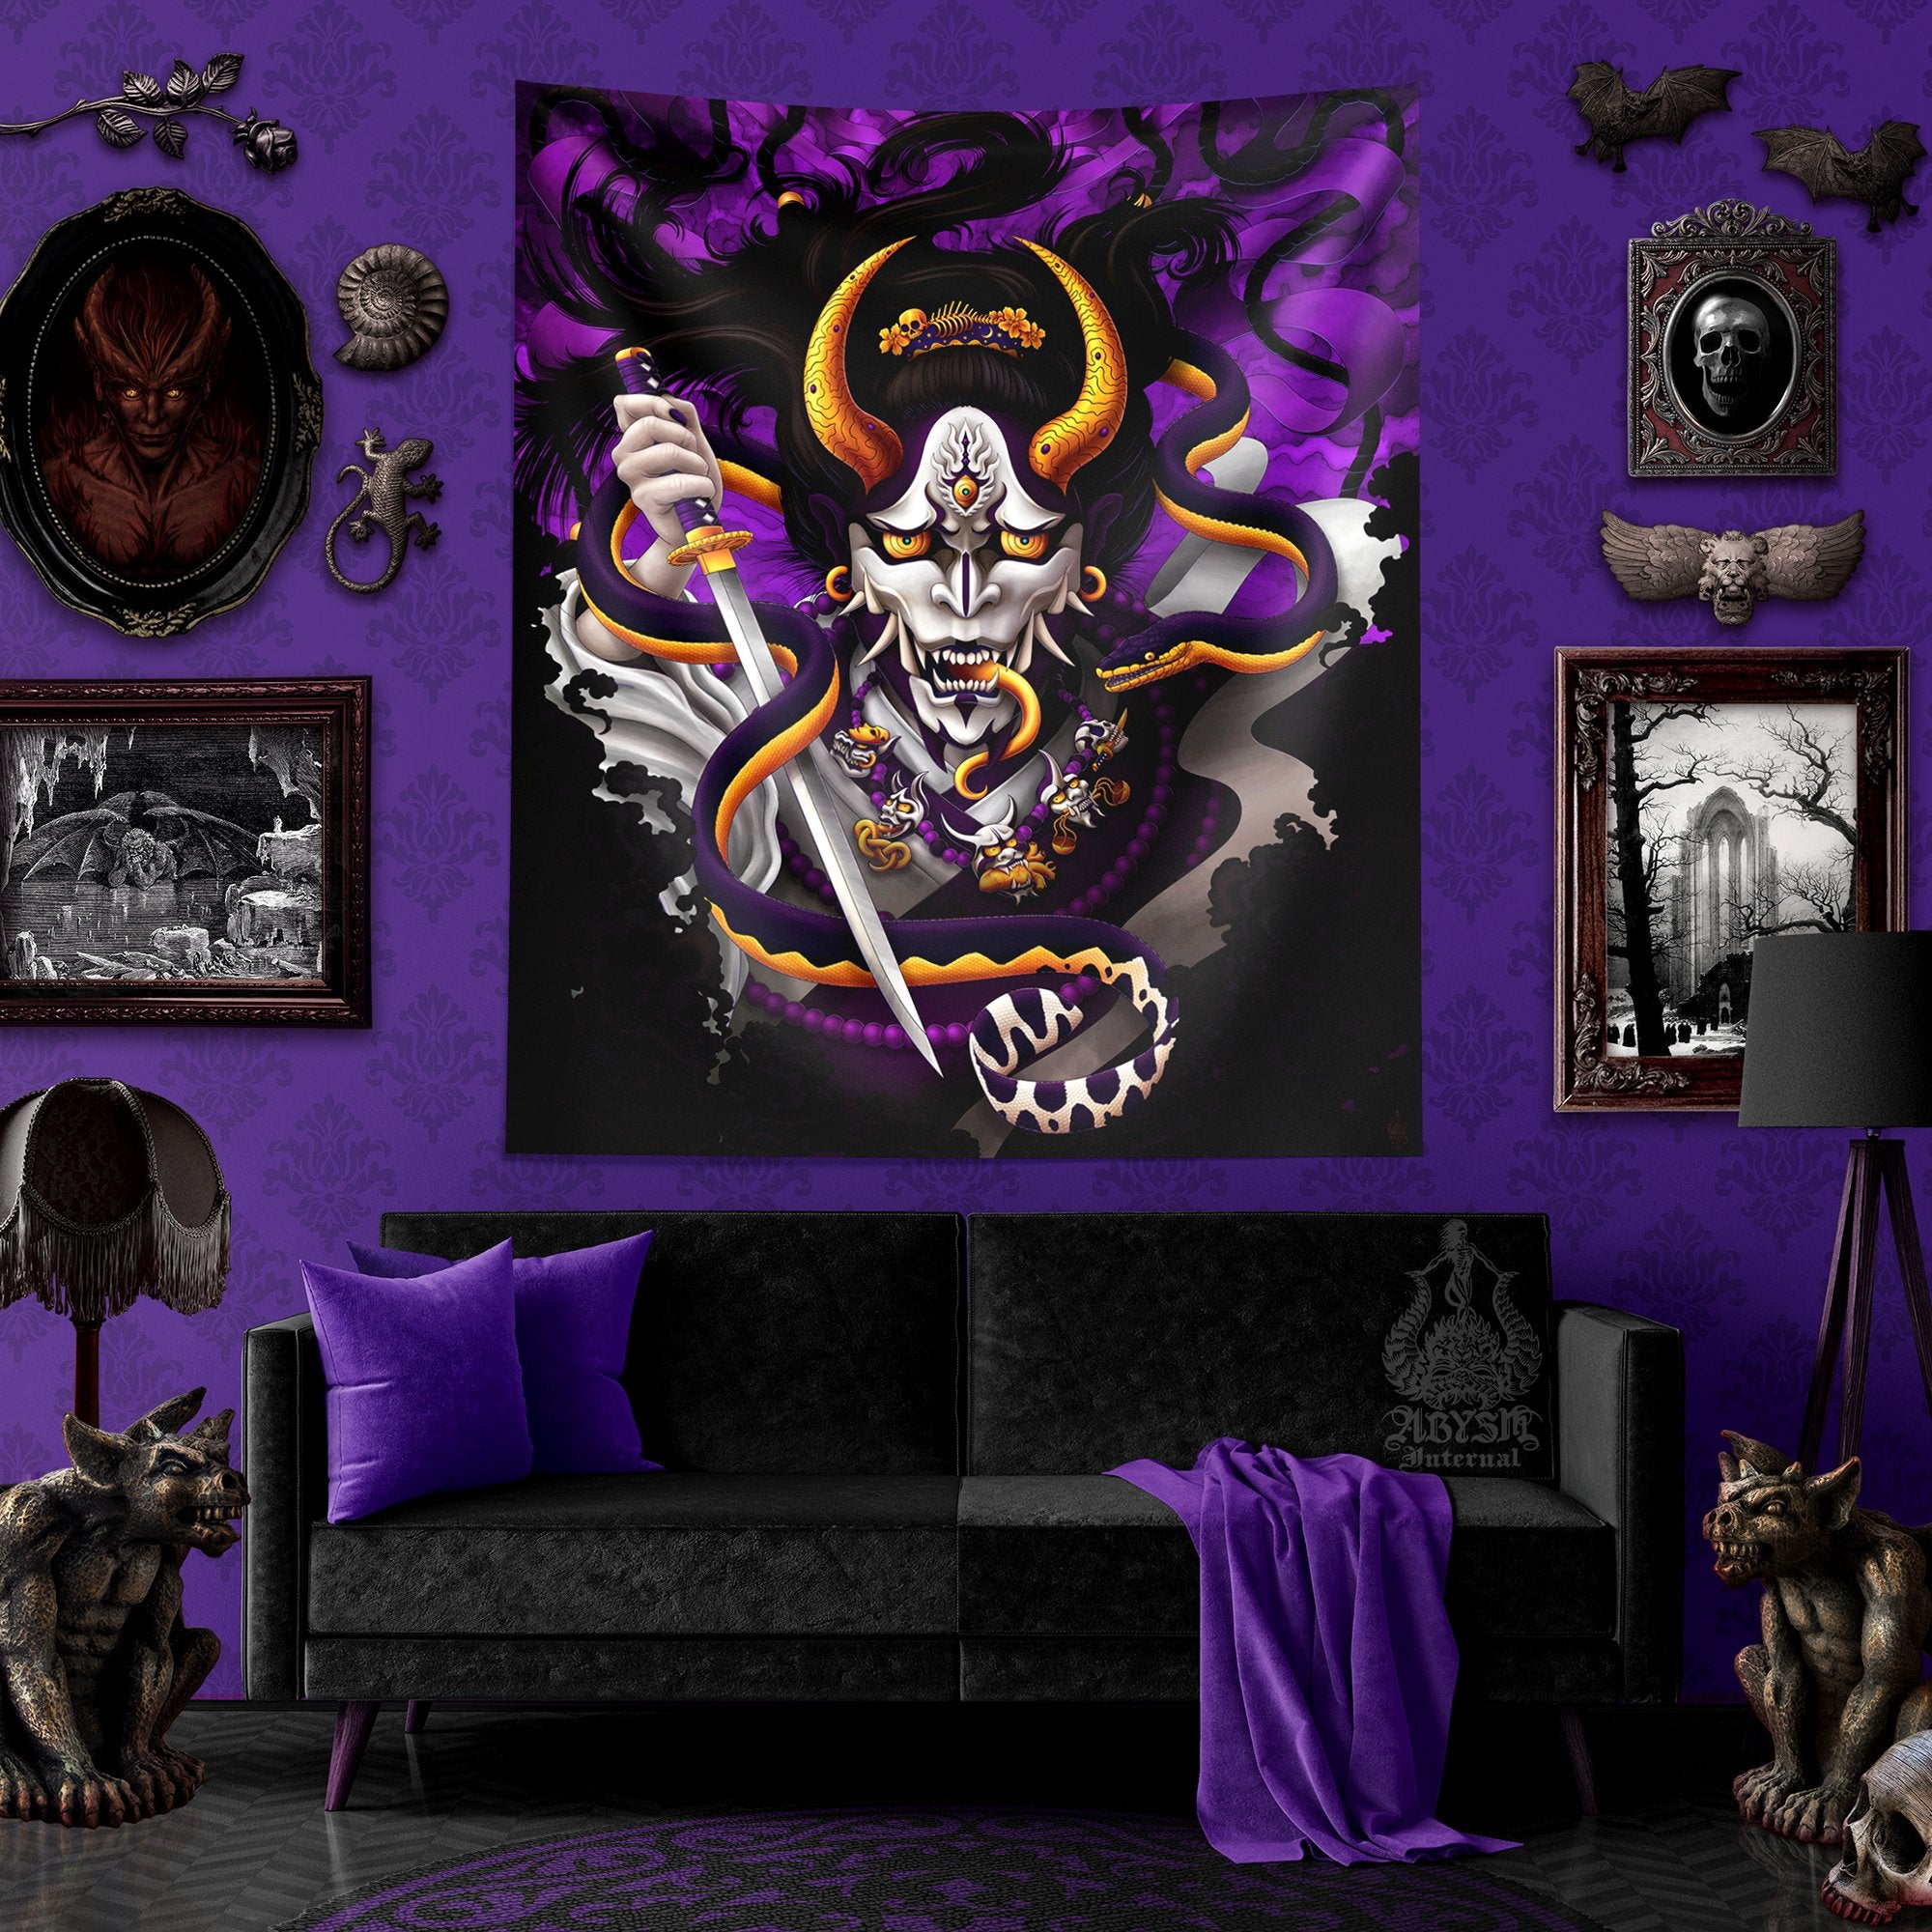 White Goth Hannya Tapestry, Japanese Demon and Snake Wall Hanging, Manga, Anime and Gamer Room Decor, Vertical Art Print - Purple - Abysm Internal